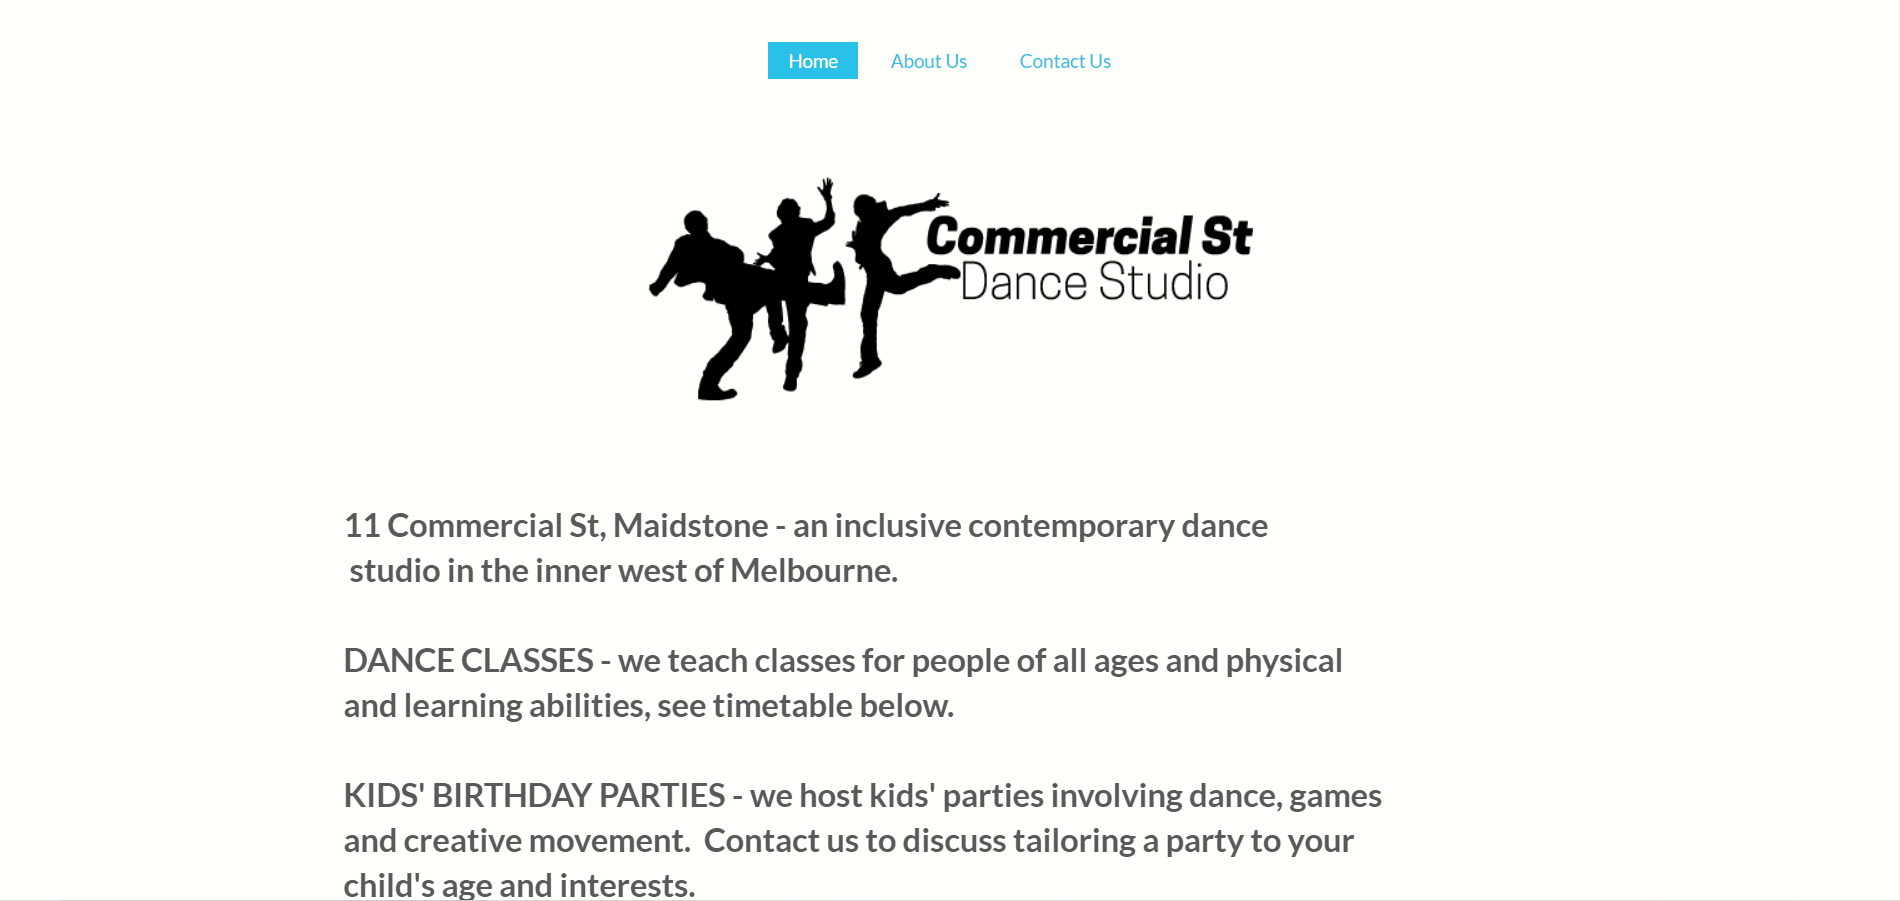 Commercial St Dance Studio